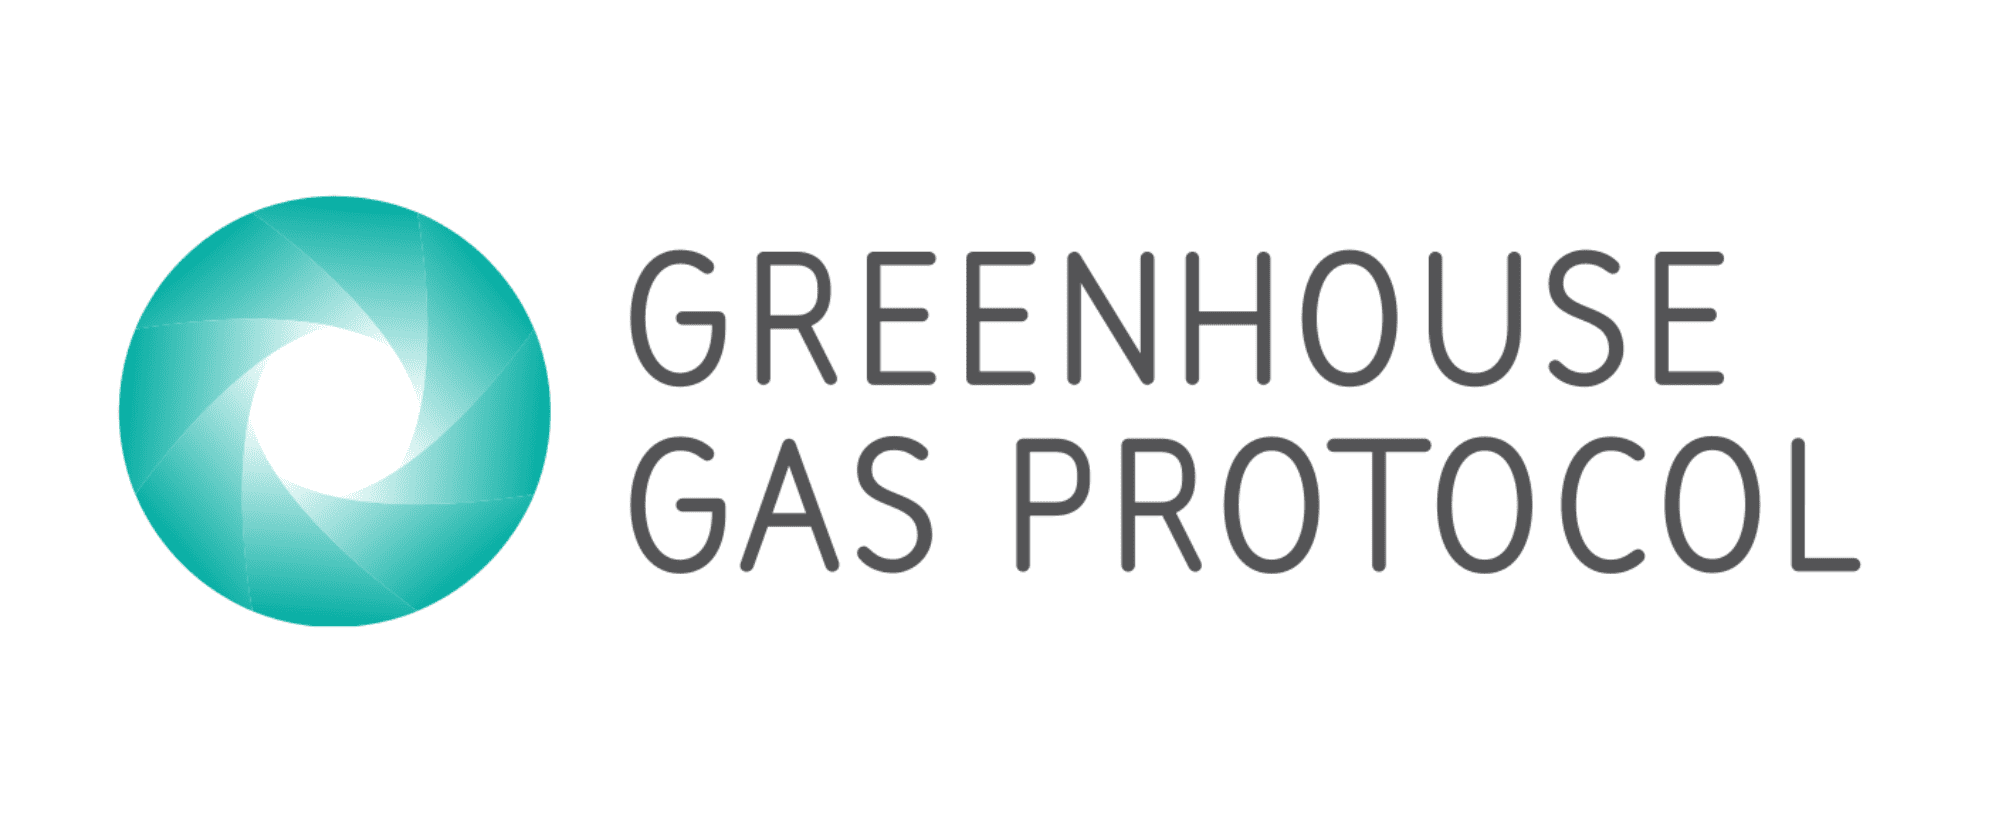 Greenhouse gas protocol